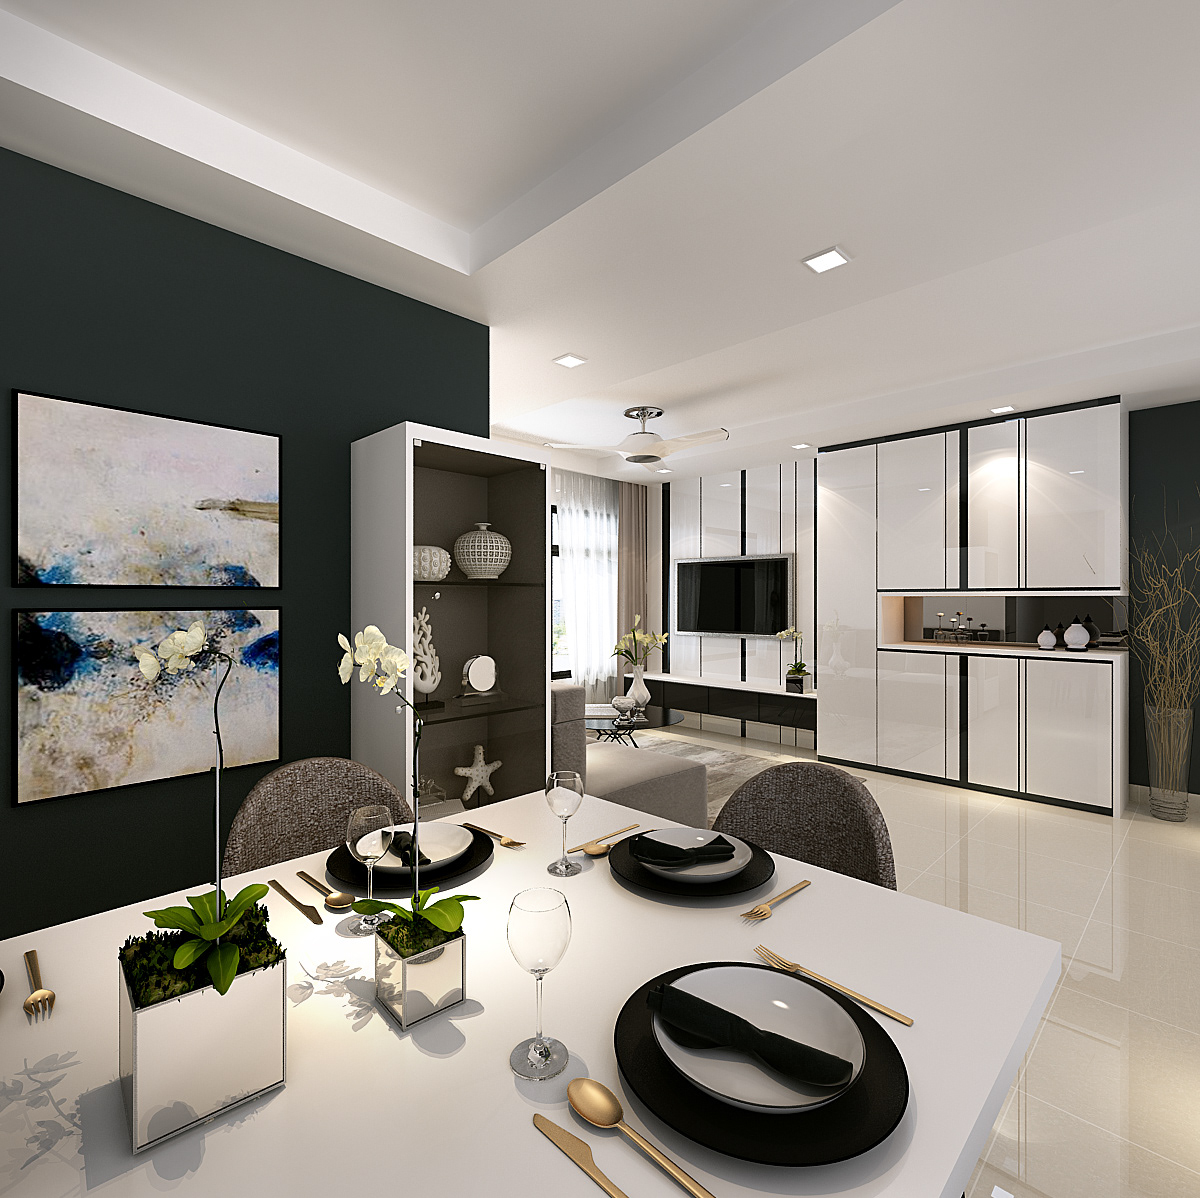 singapore hdb modern renovation interior design  living room kitchen bedroom